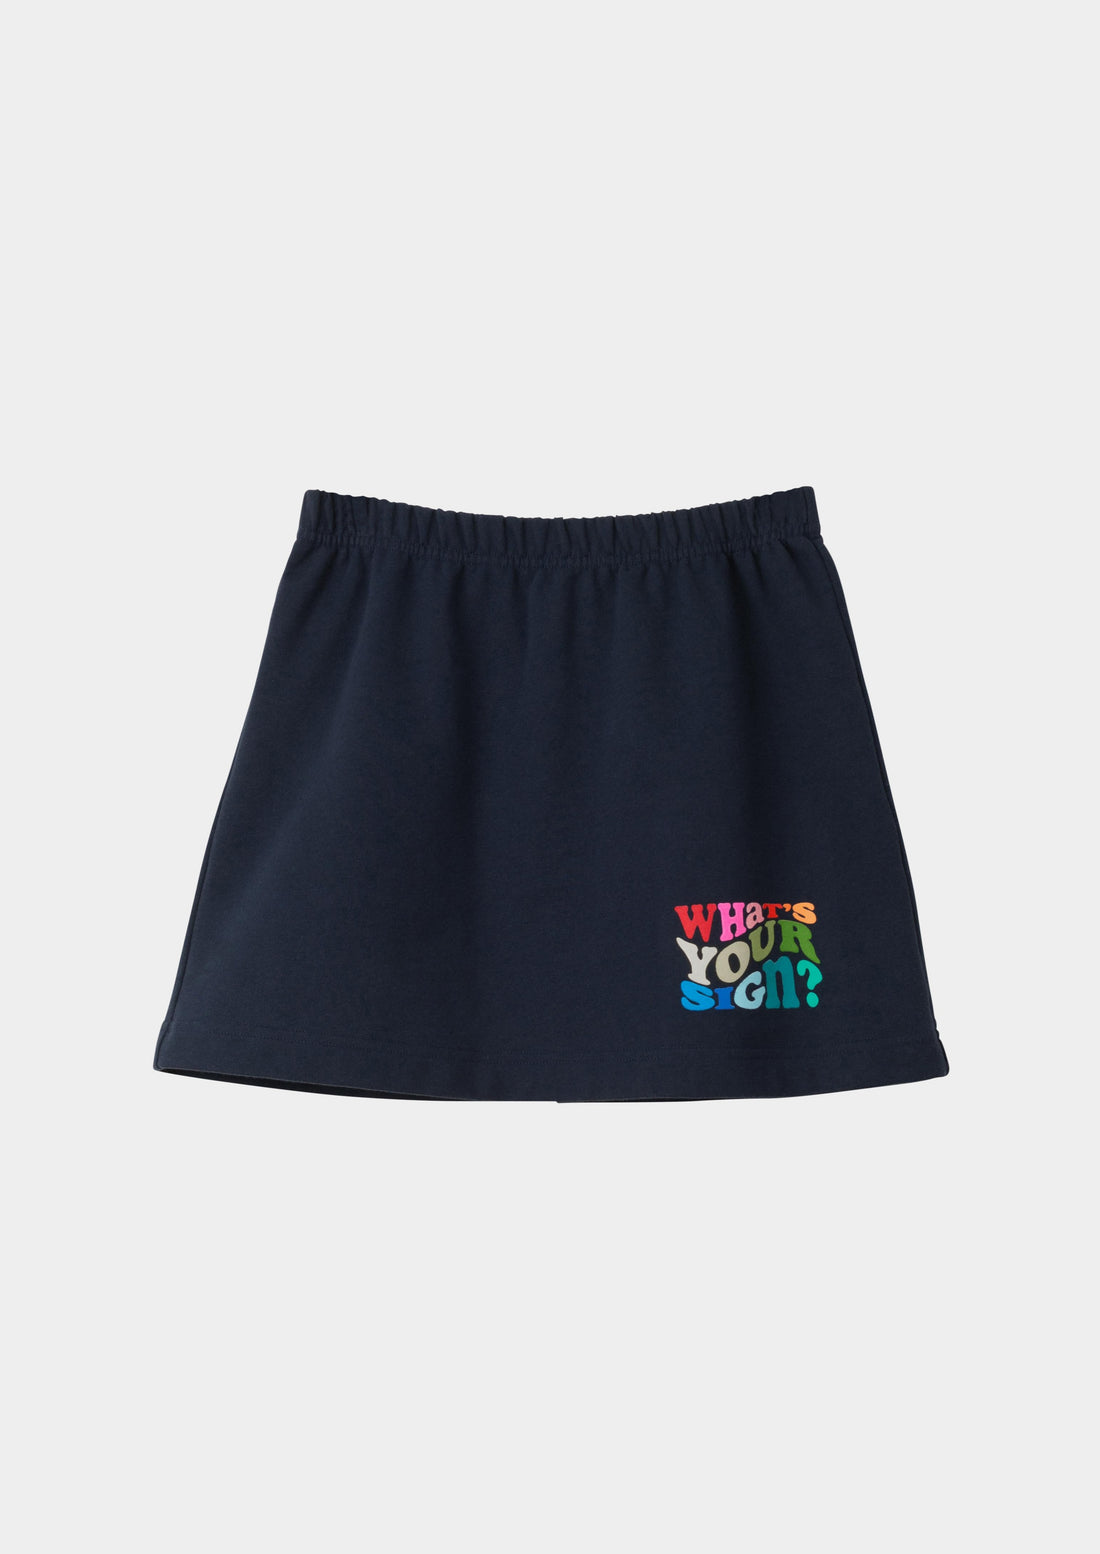 Dooz What's Your Sign? Sweat Skirt navy cotton fleece with rainbow silkscreen print and elastic waistband